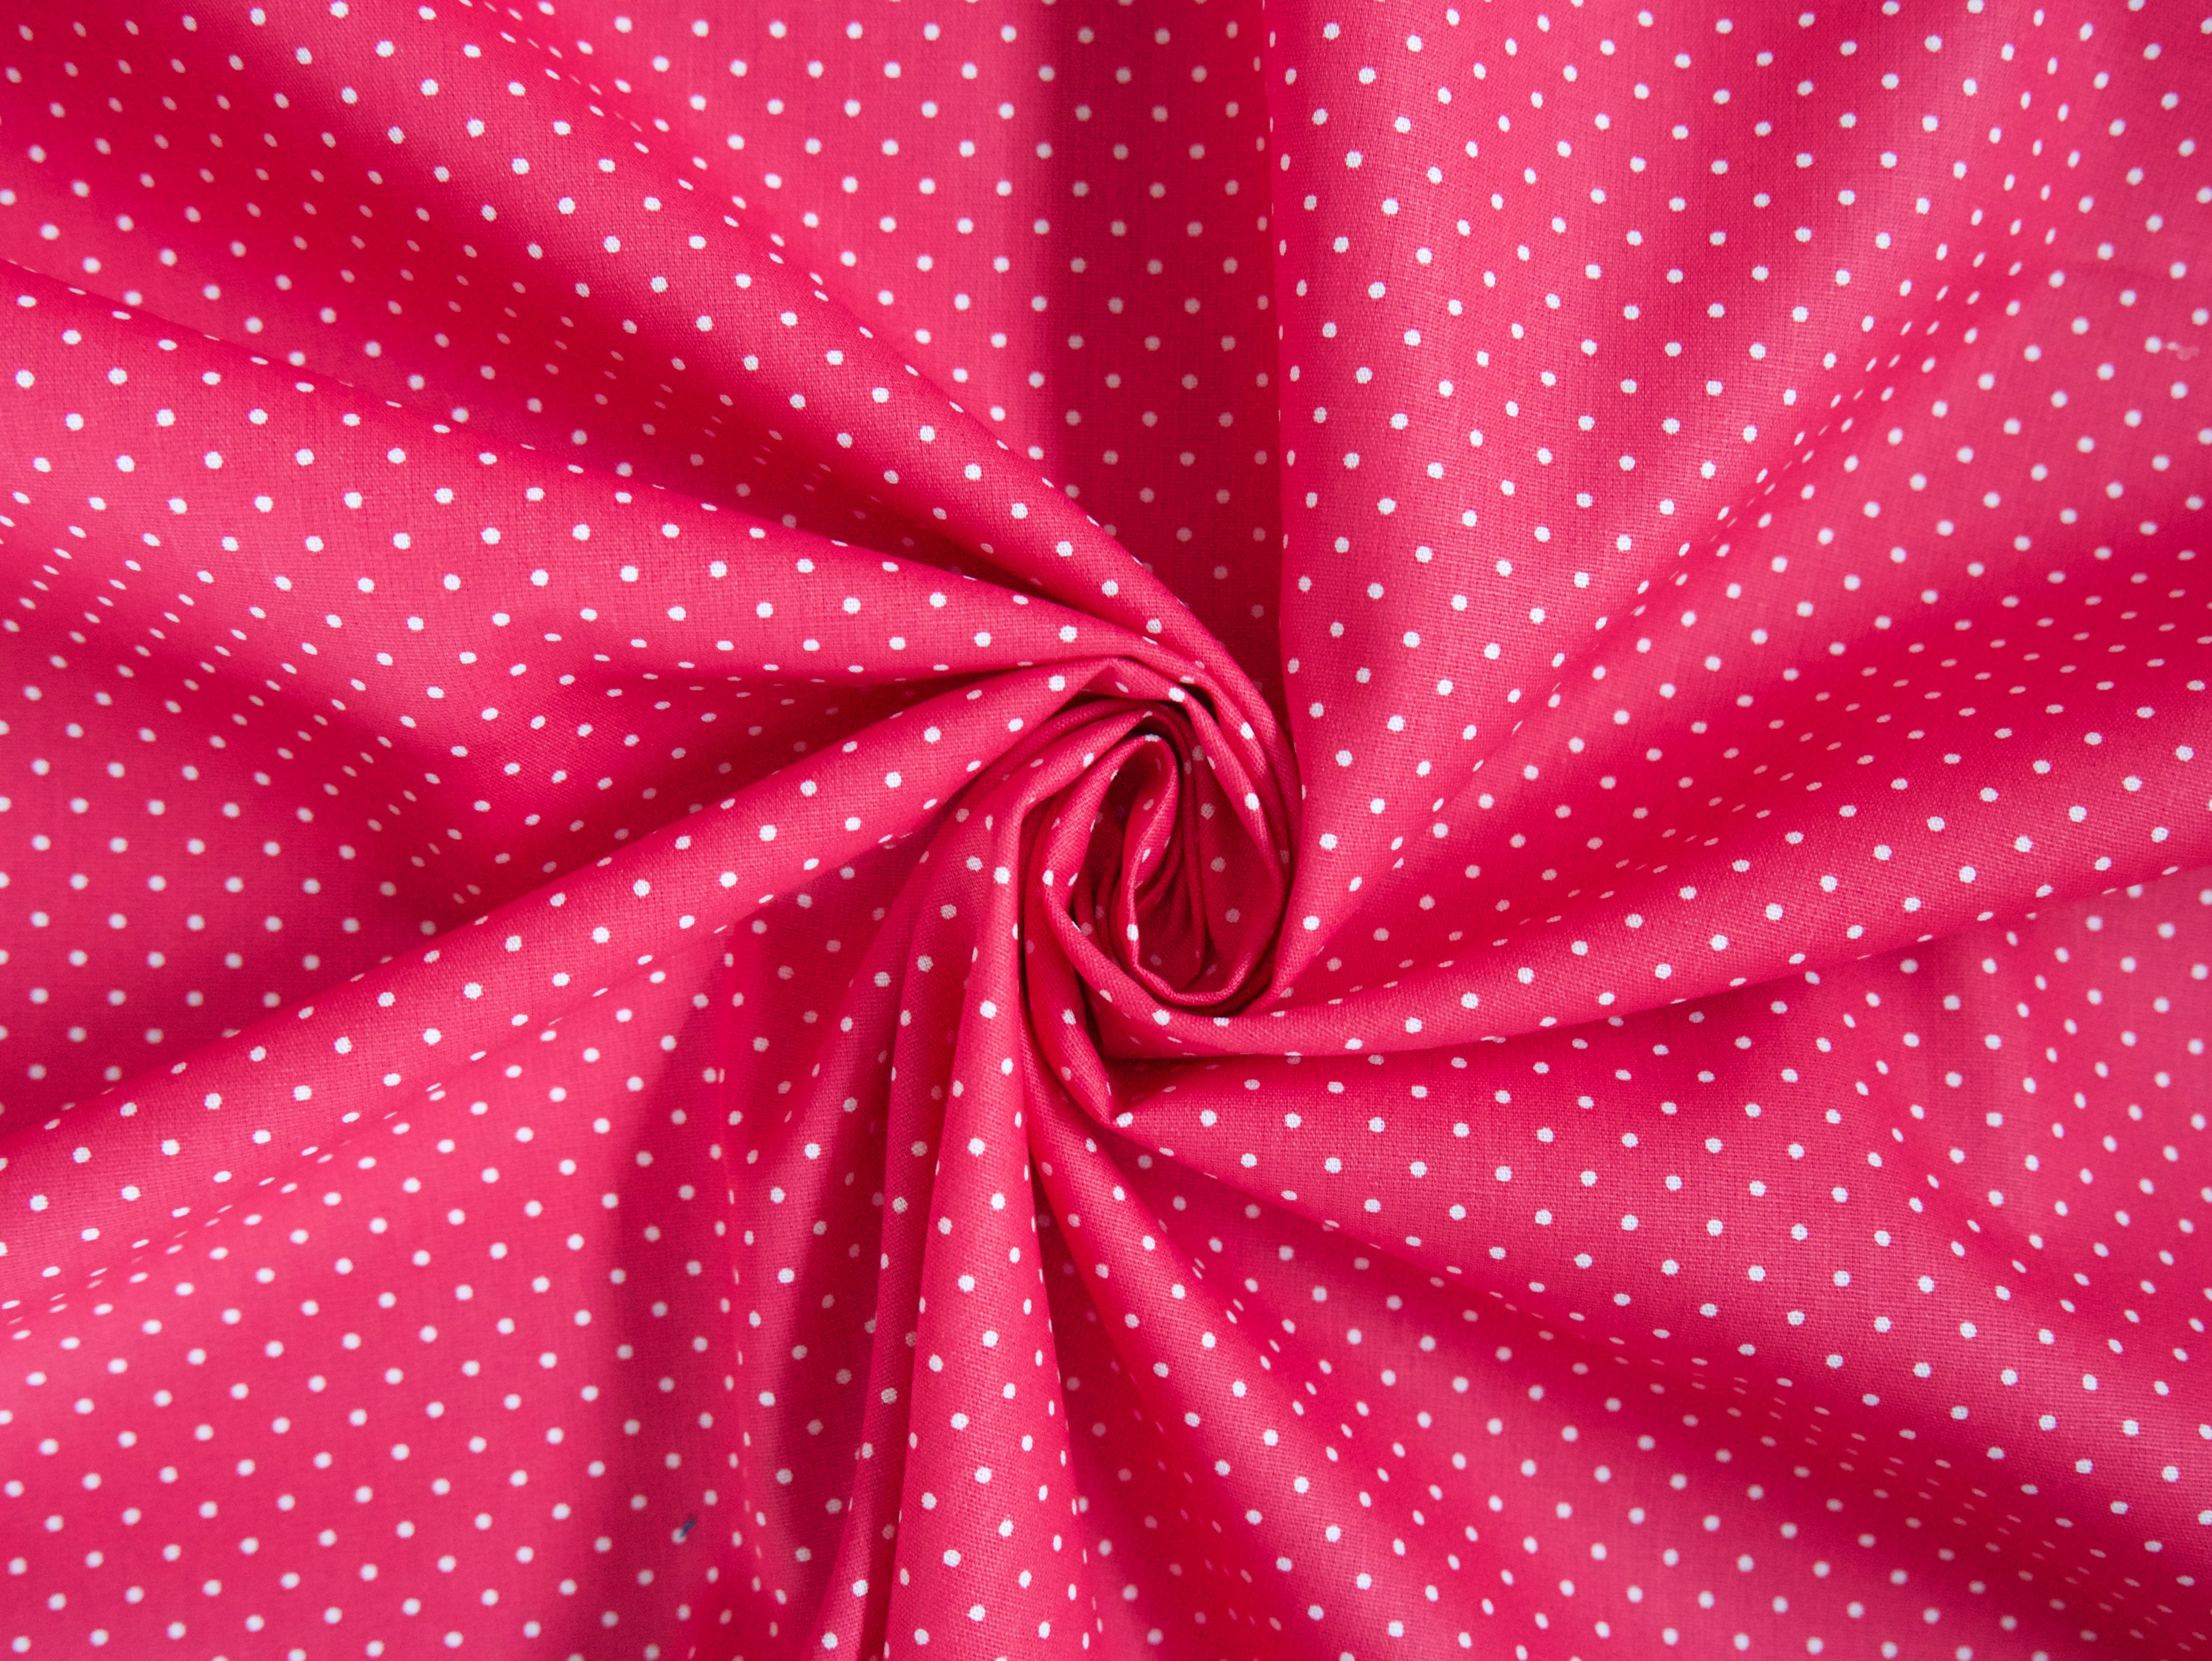 Pin-Spot Printed Cotton, Cerise £8.50 p/m-Fabric-Flying Bobbins Haberdashery